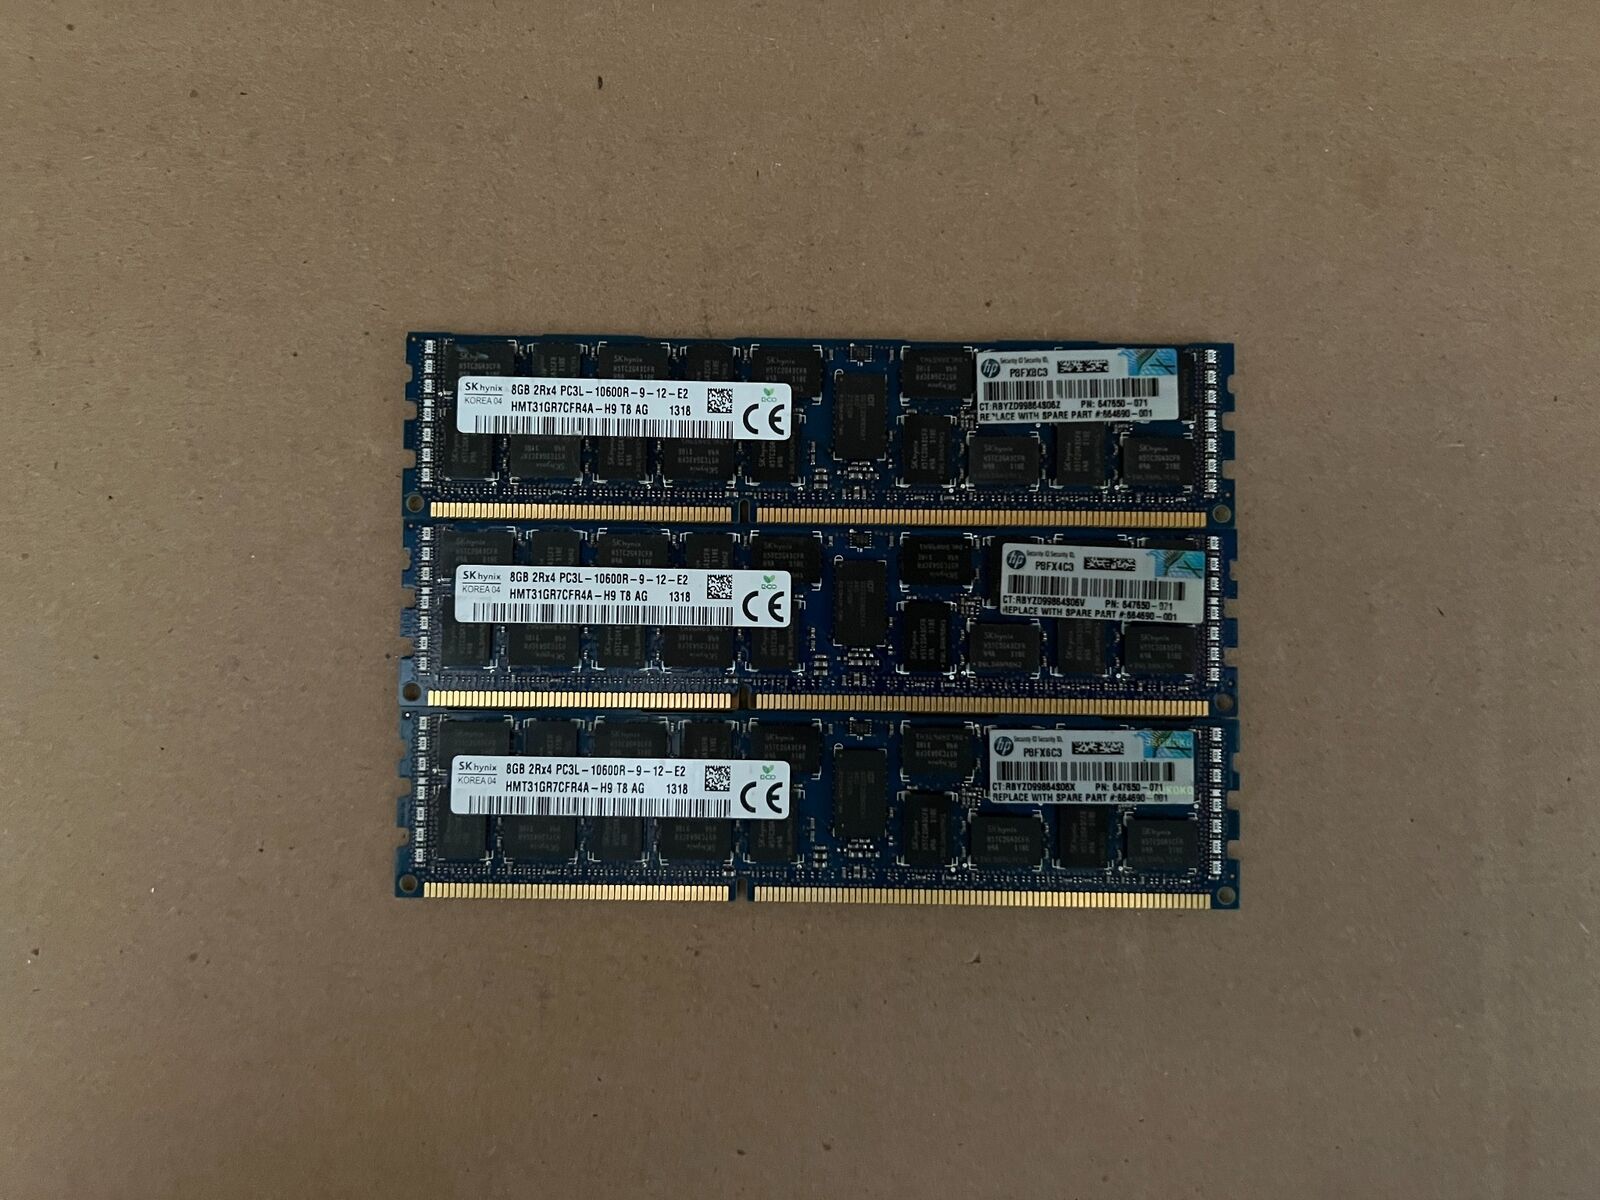 3X HYNIX 8GB PC3L-10600R 1333MHZ SDRAM SERVER MEMORY HMT31GR7CFR4A-H9 AA3-2(3)